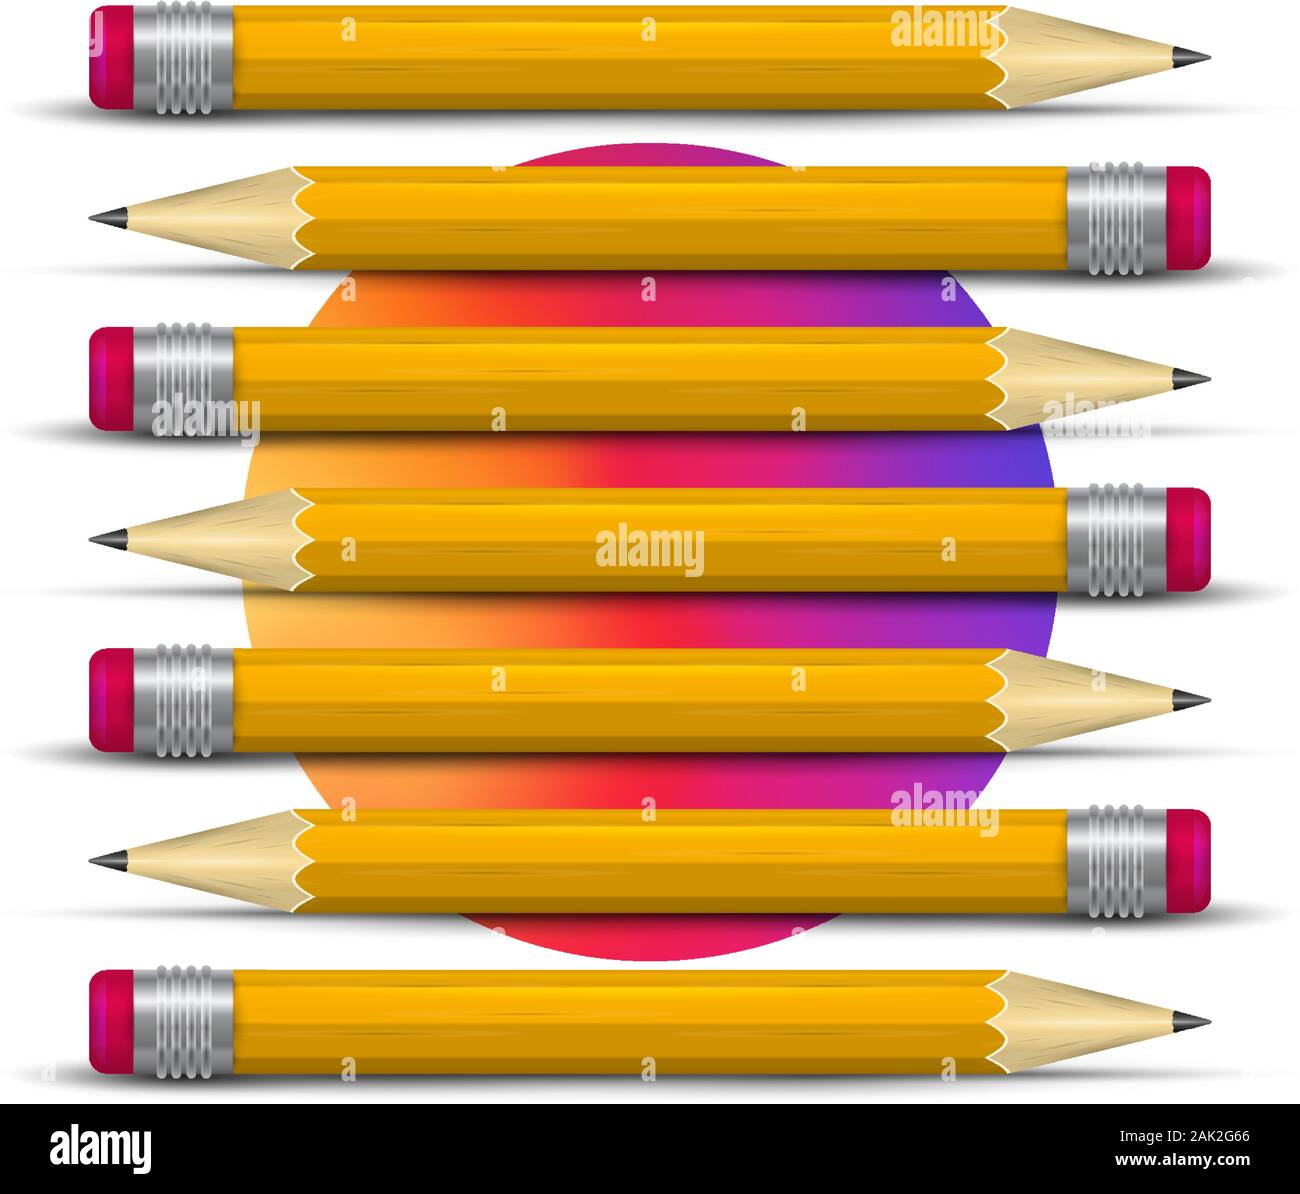 Realistic pencil set. Creation metaphor. Gradient circle. 3D pencil vector illustration. Writing orange sharp pencils with eraser and shadow. Stock Vector